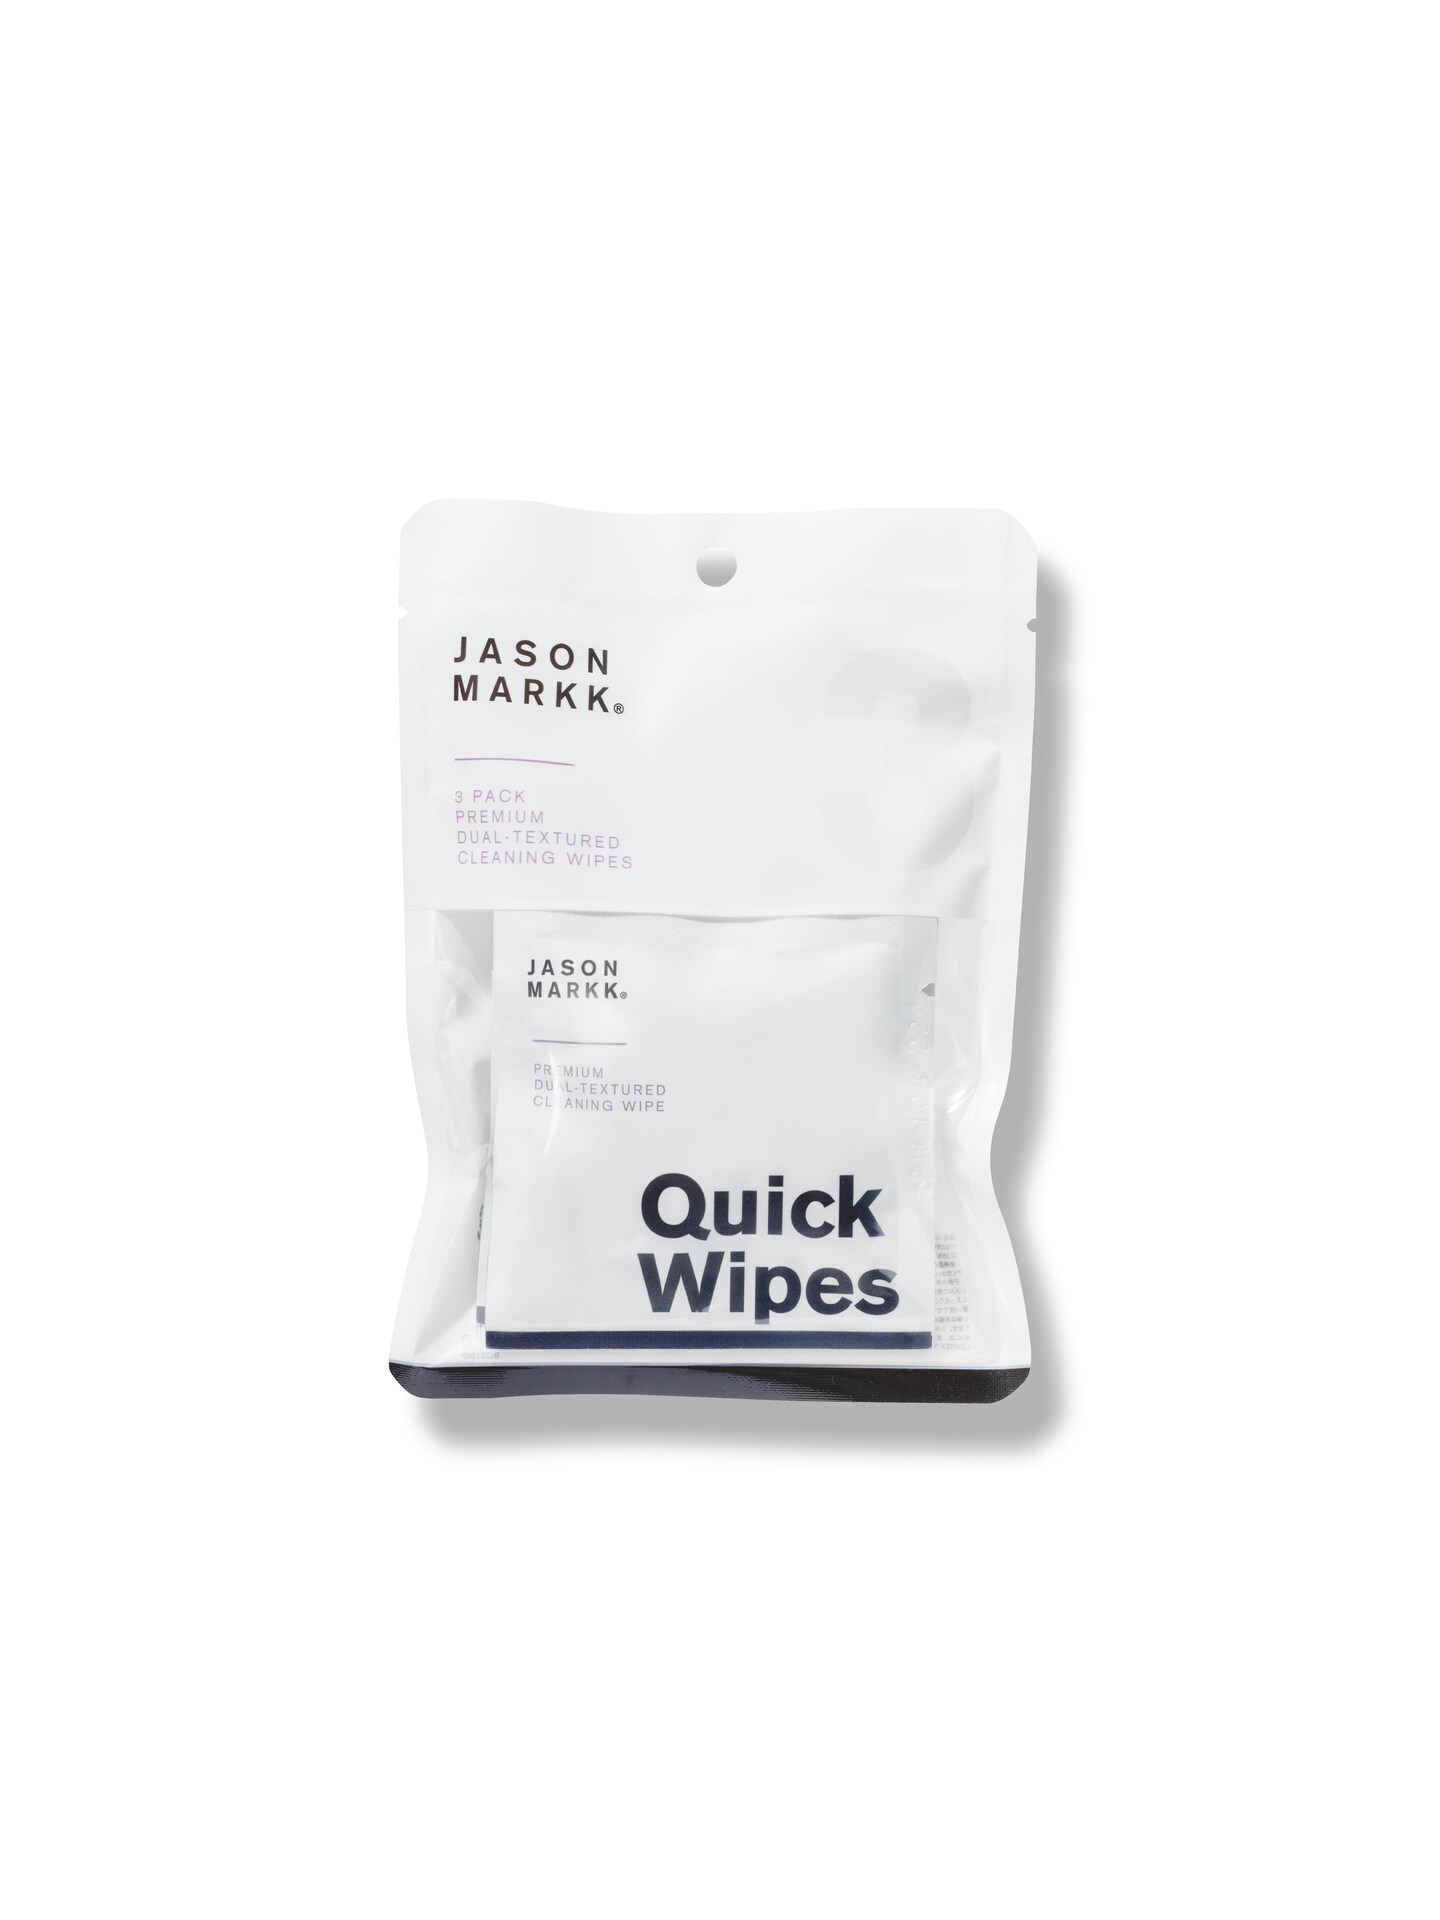 Jason Markk Shoe Cleaner Quick Wipes - 3 Pack